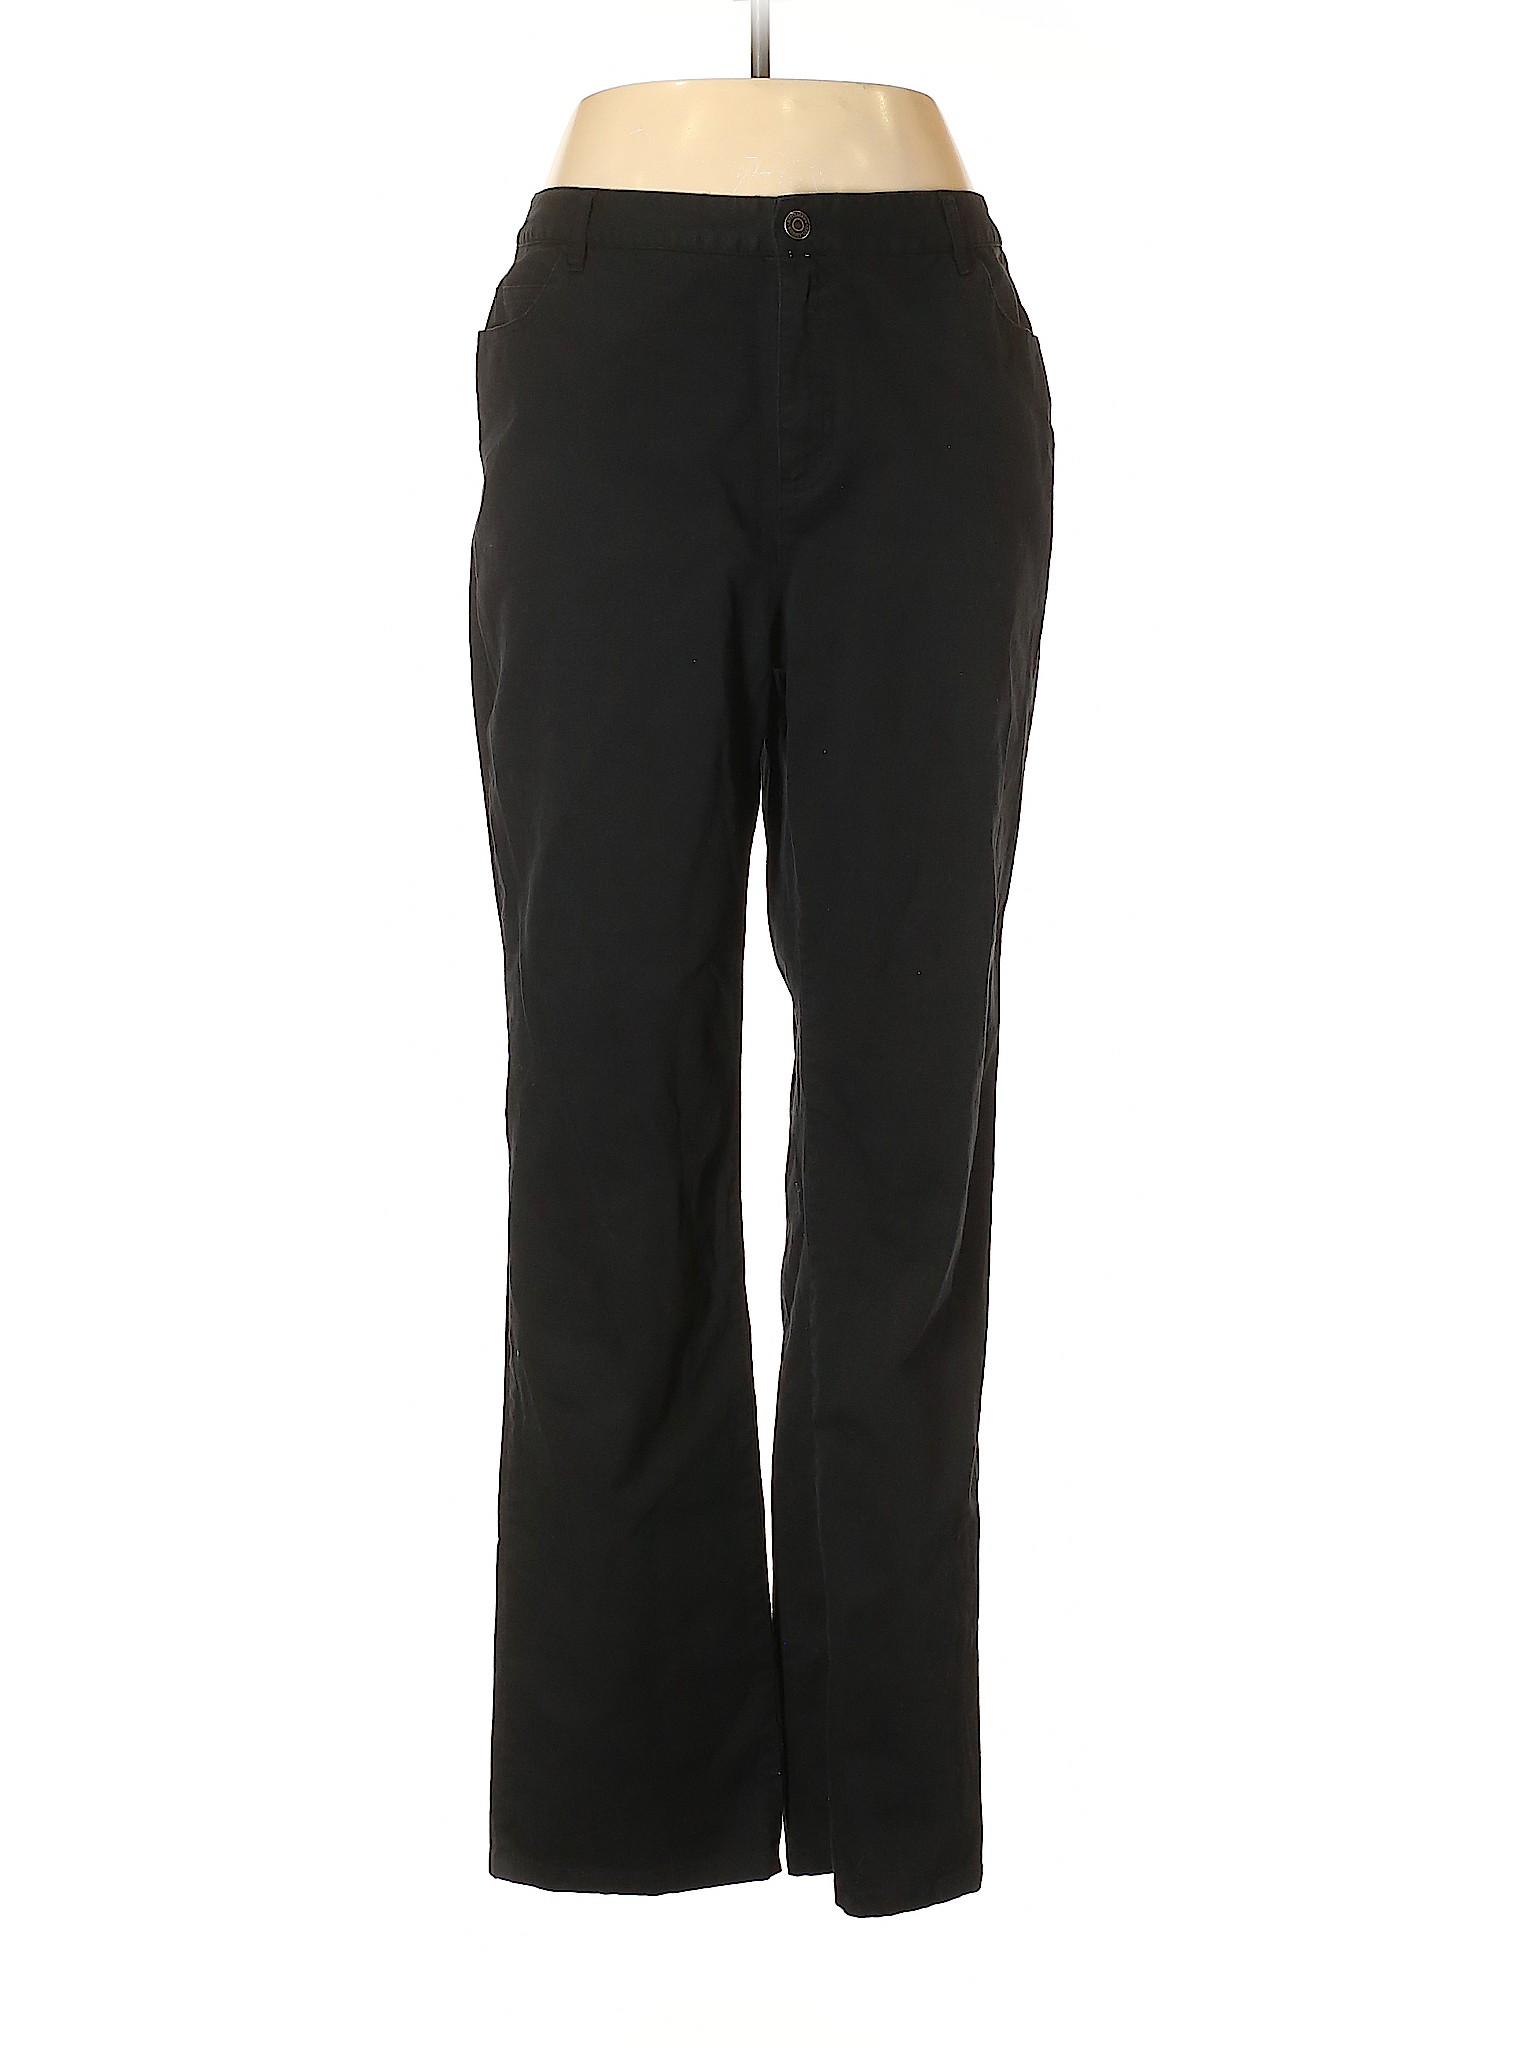 Appleseeds Women Black Jeans 12 | eBay